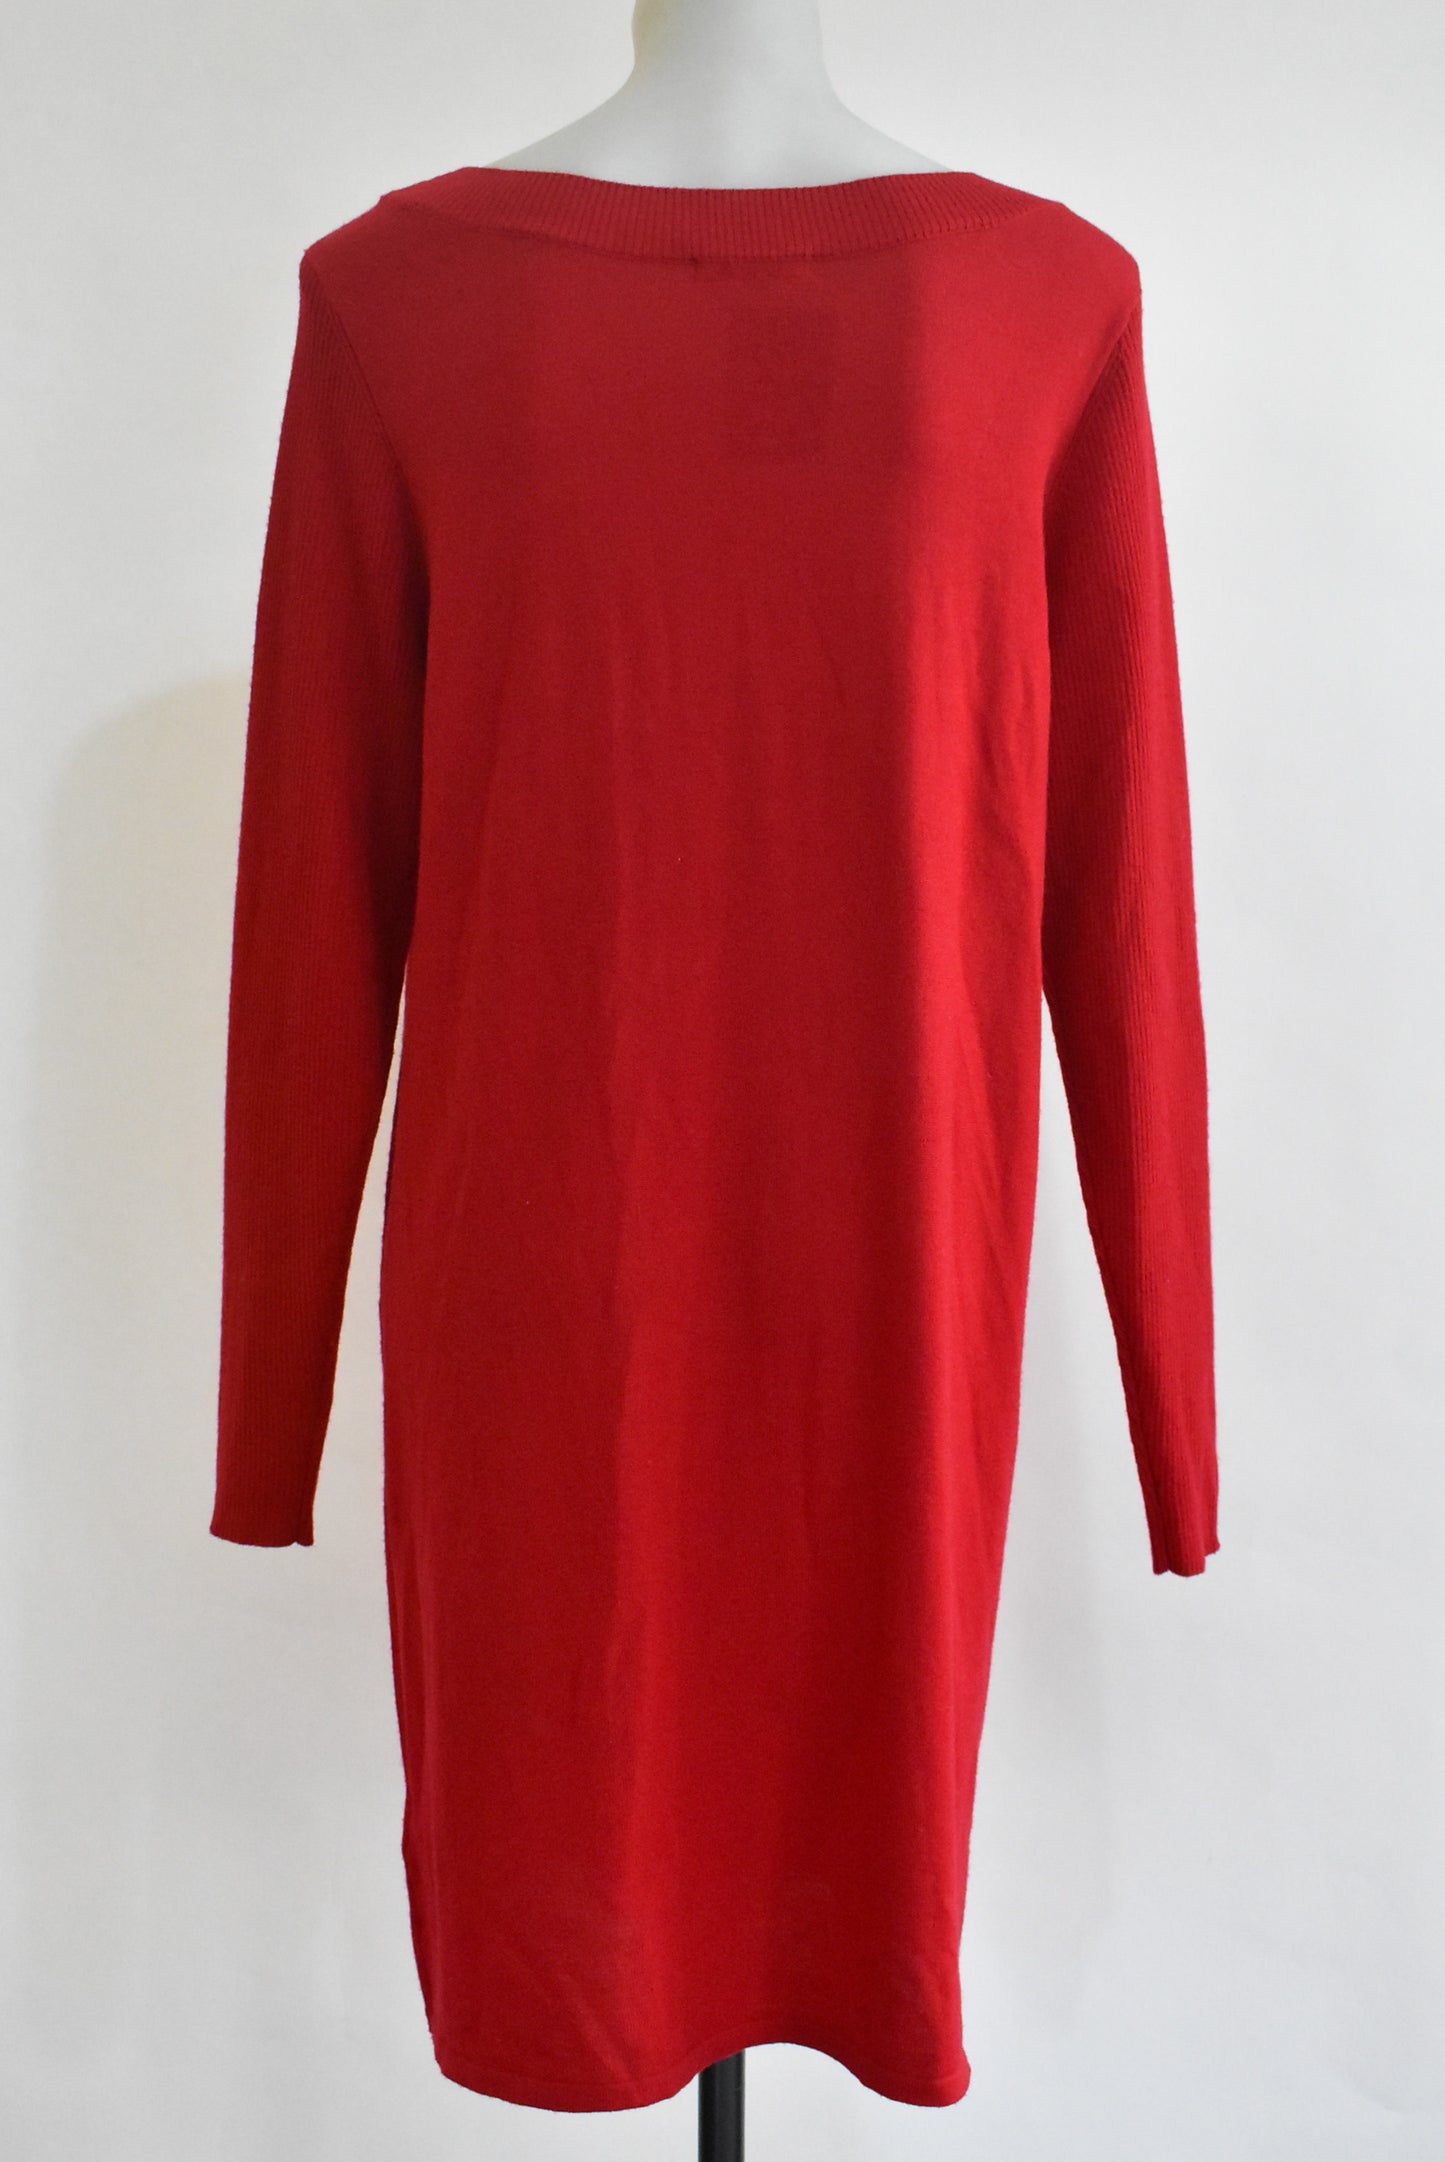 Workshop red merino sweater dress (size M)